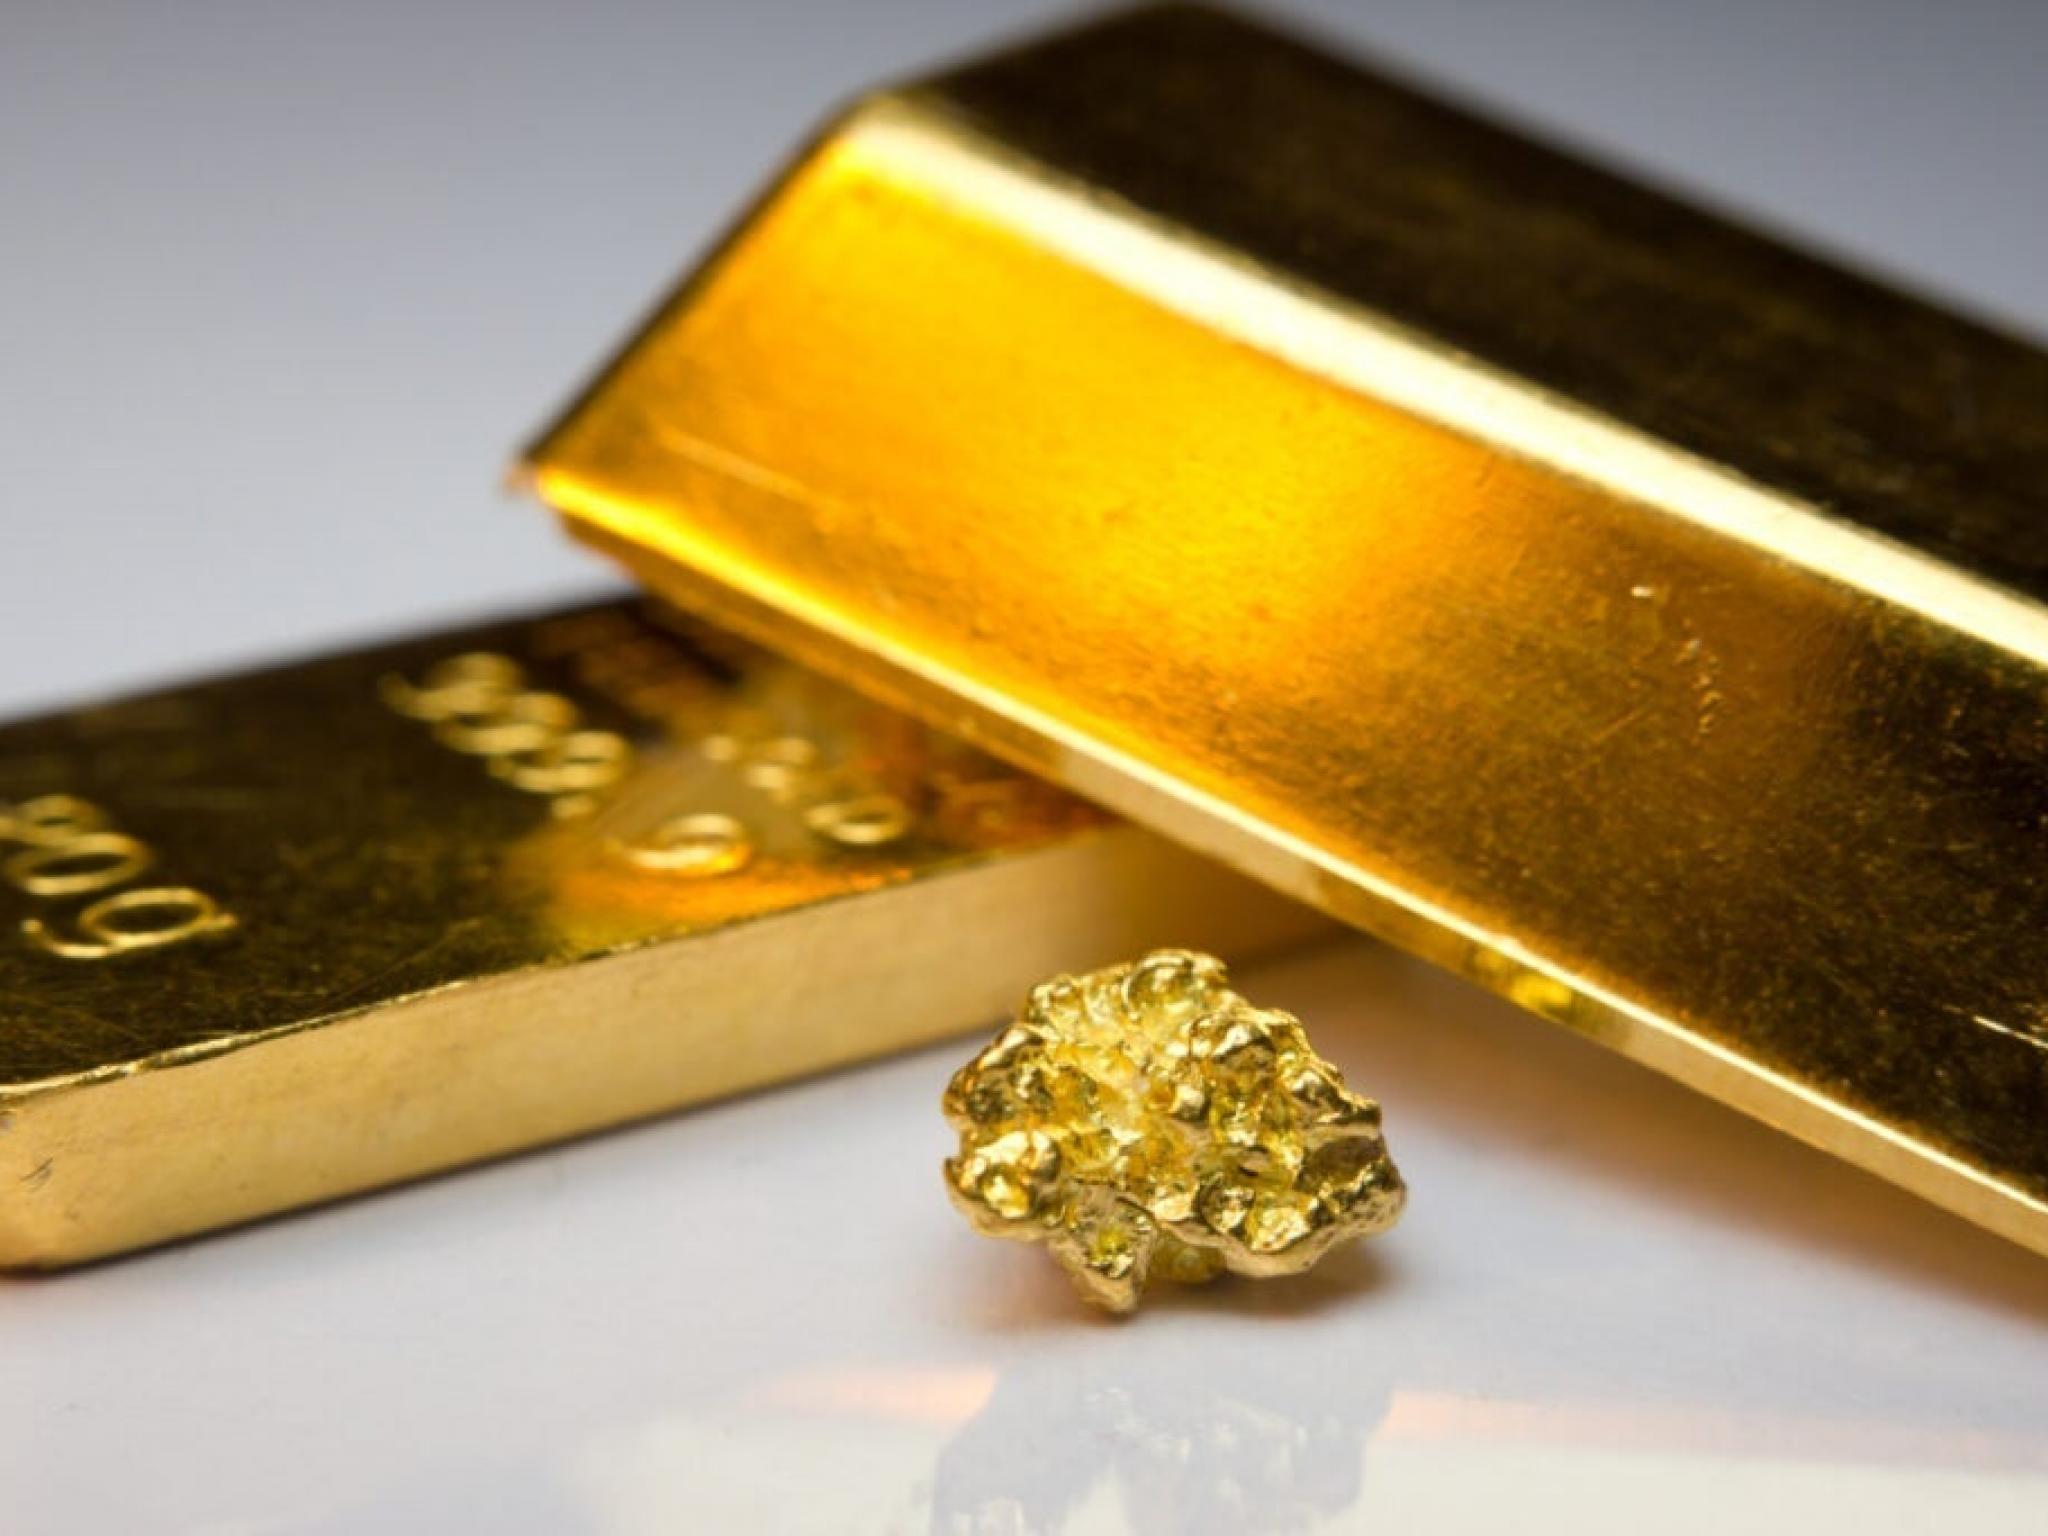  gold-falls-over-1-hillevax-shares-plunge 